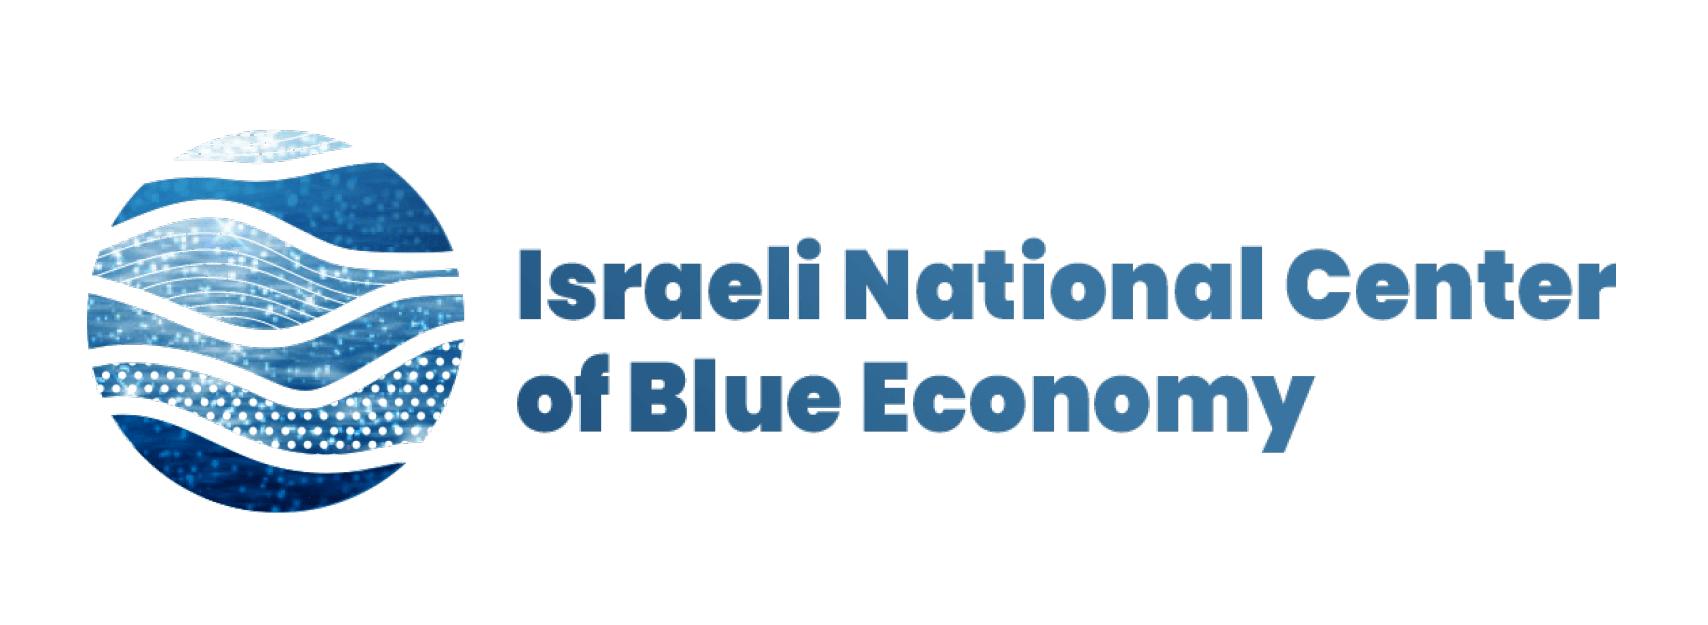 Israel National Center of Blue Economy logo